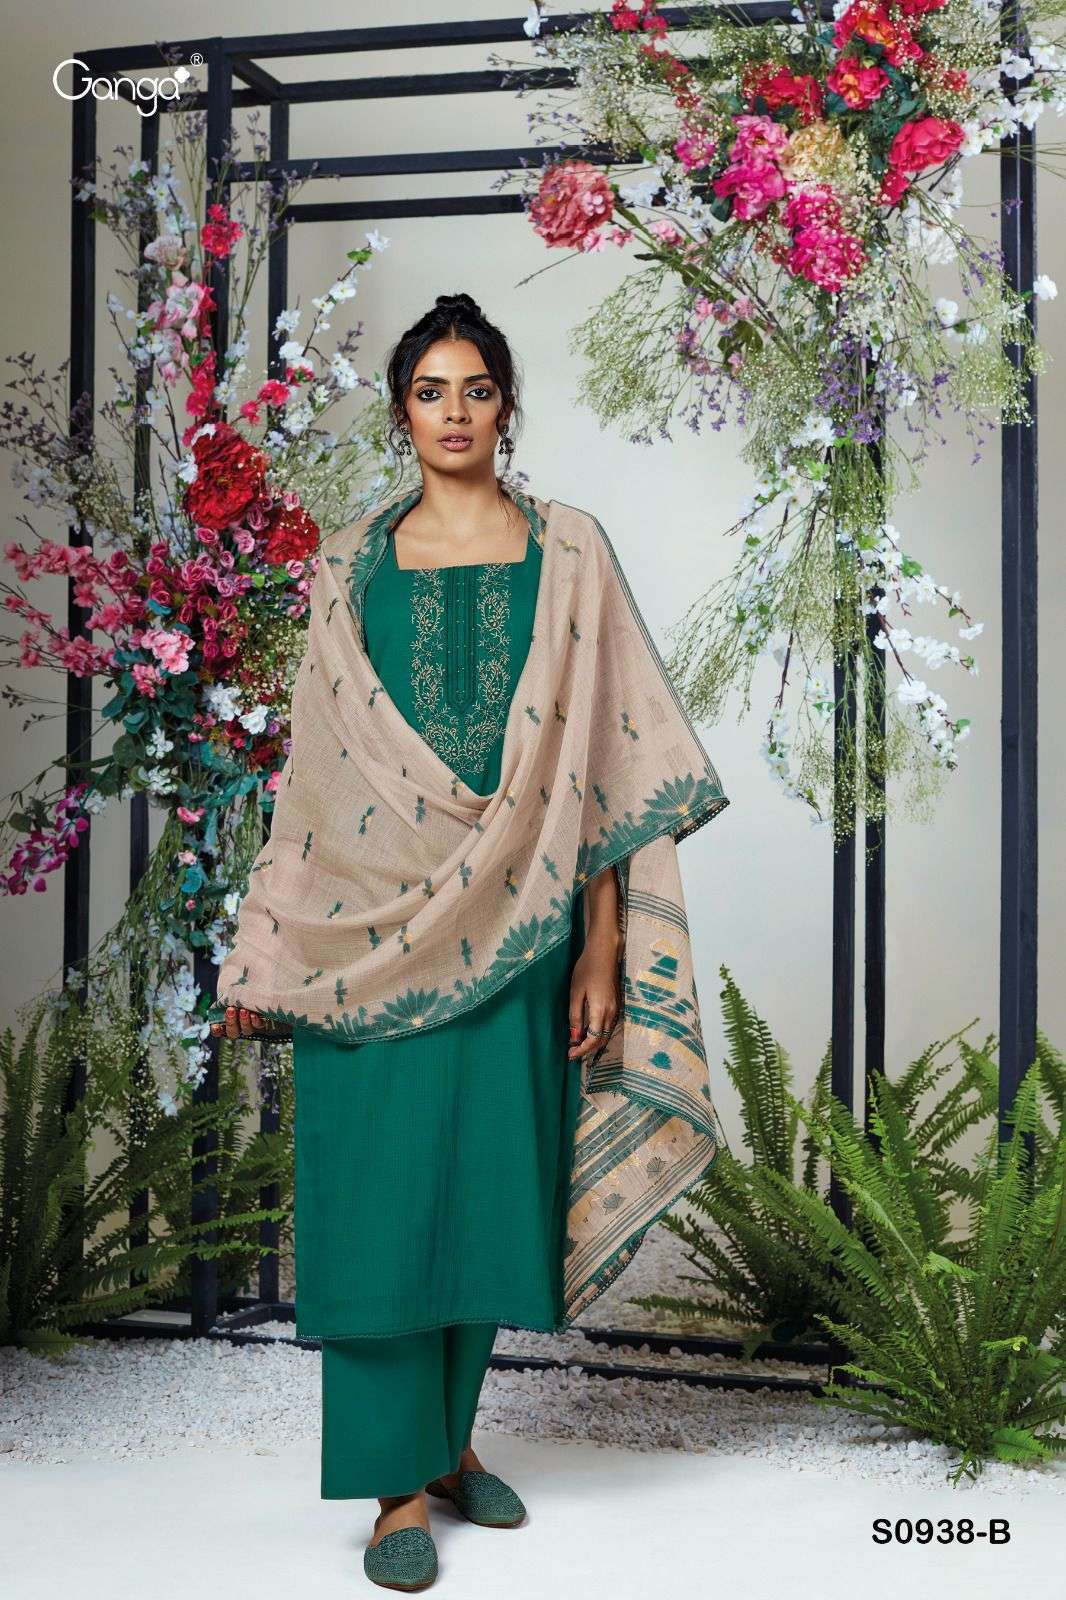 ganga ishana 938 series premium cotton with work designer salwar kameez surat 